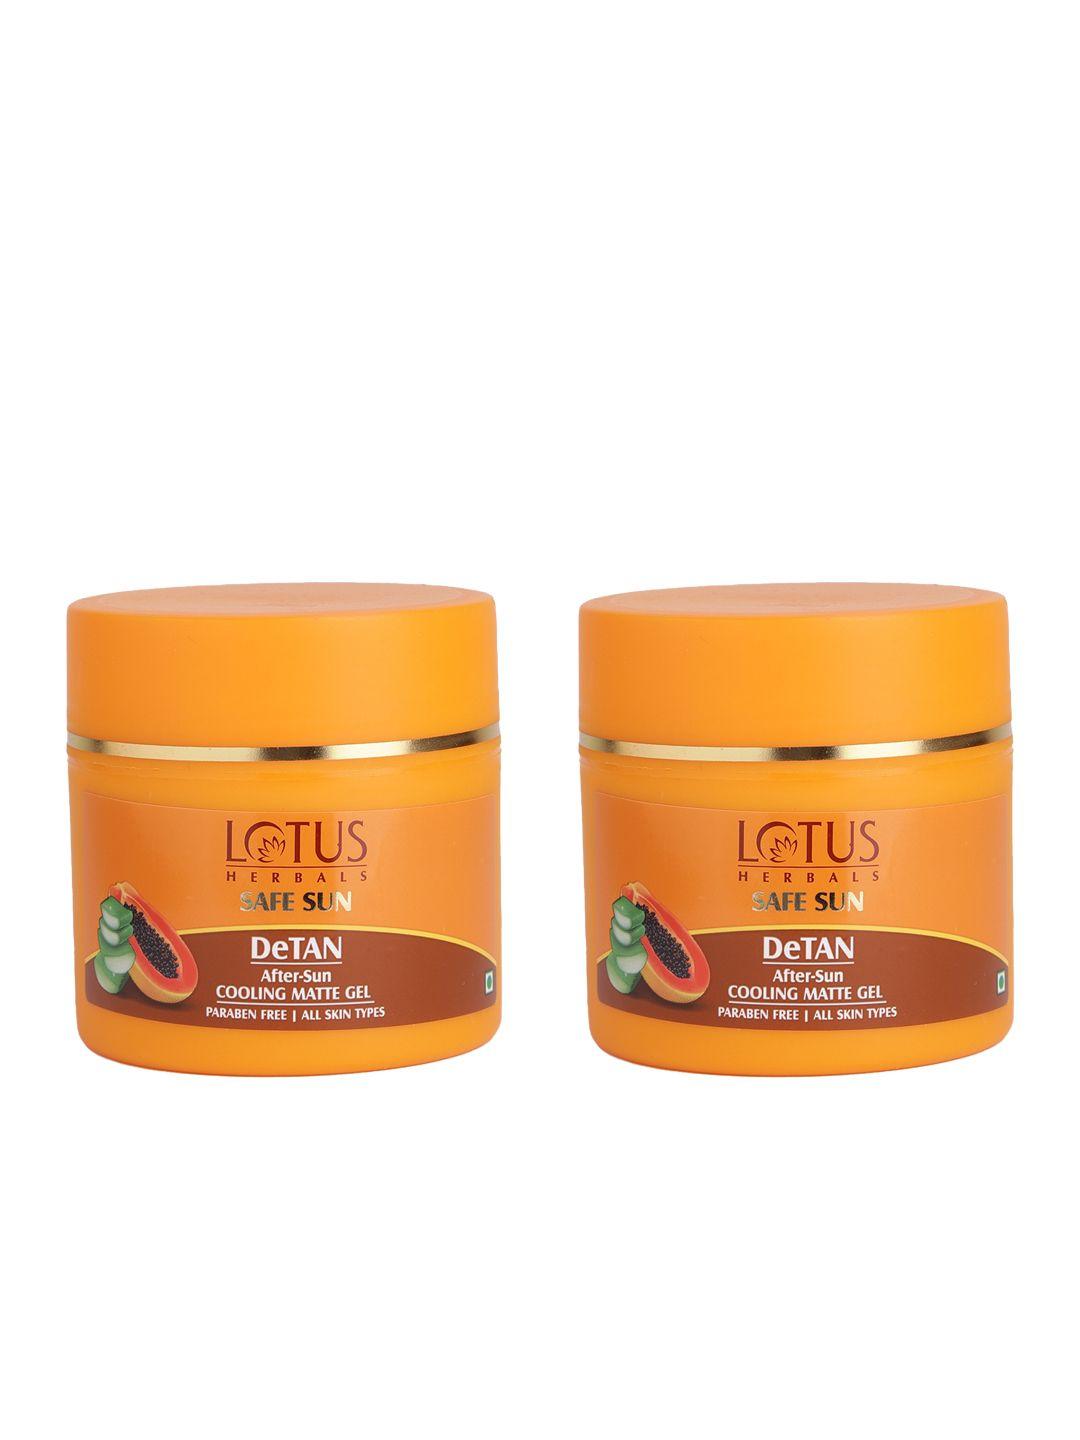 lotus herbals set of 2 safe sun detan after-sun cooling matte gel - 100 g each